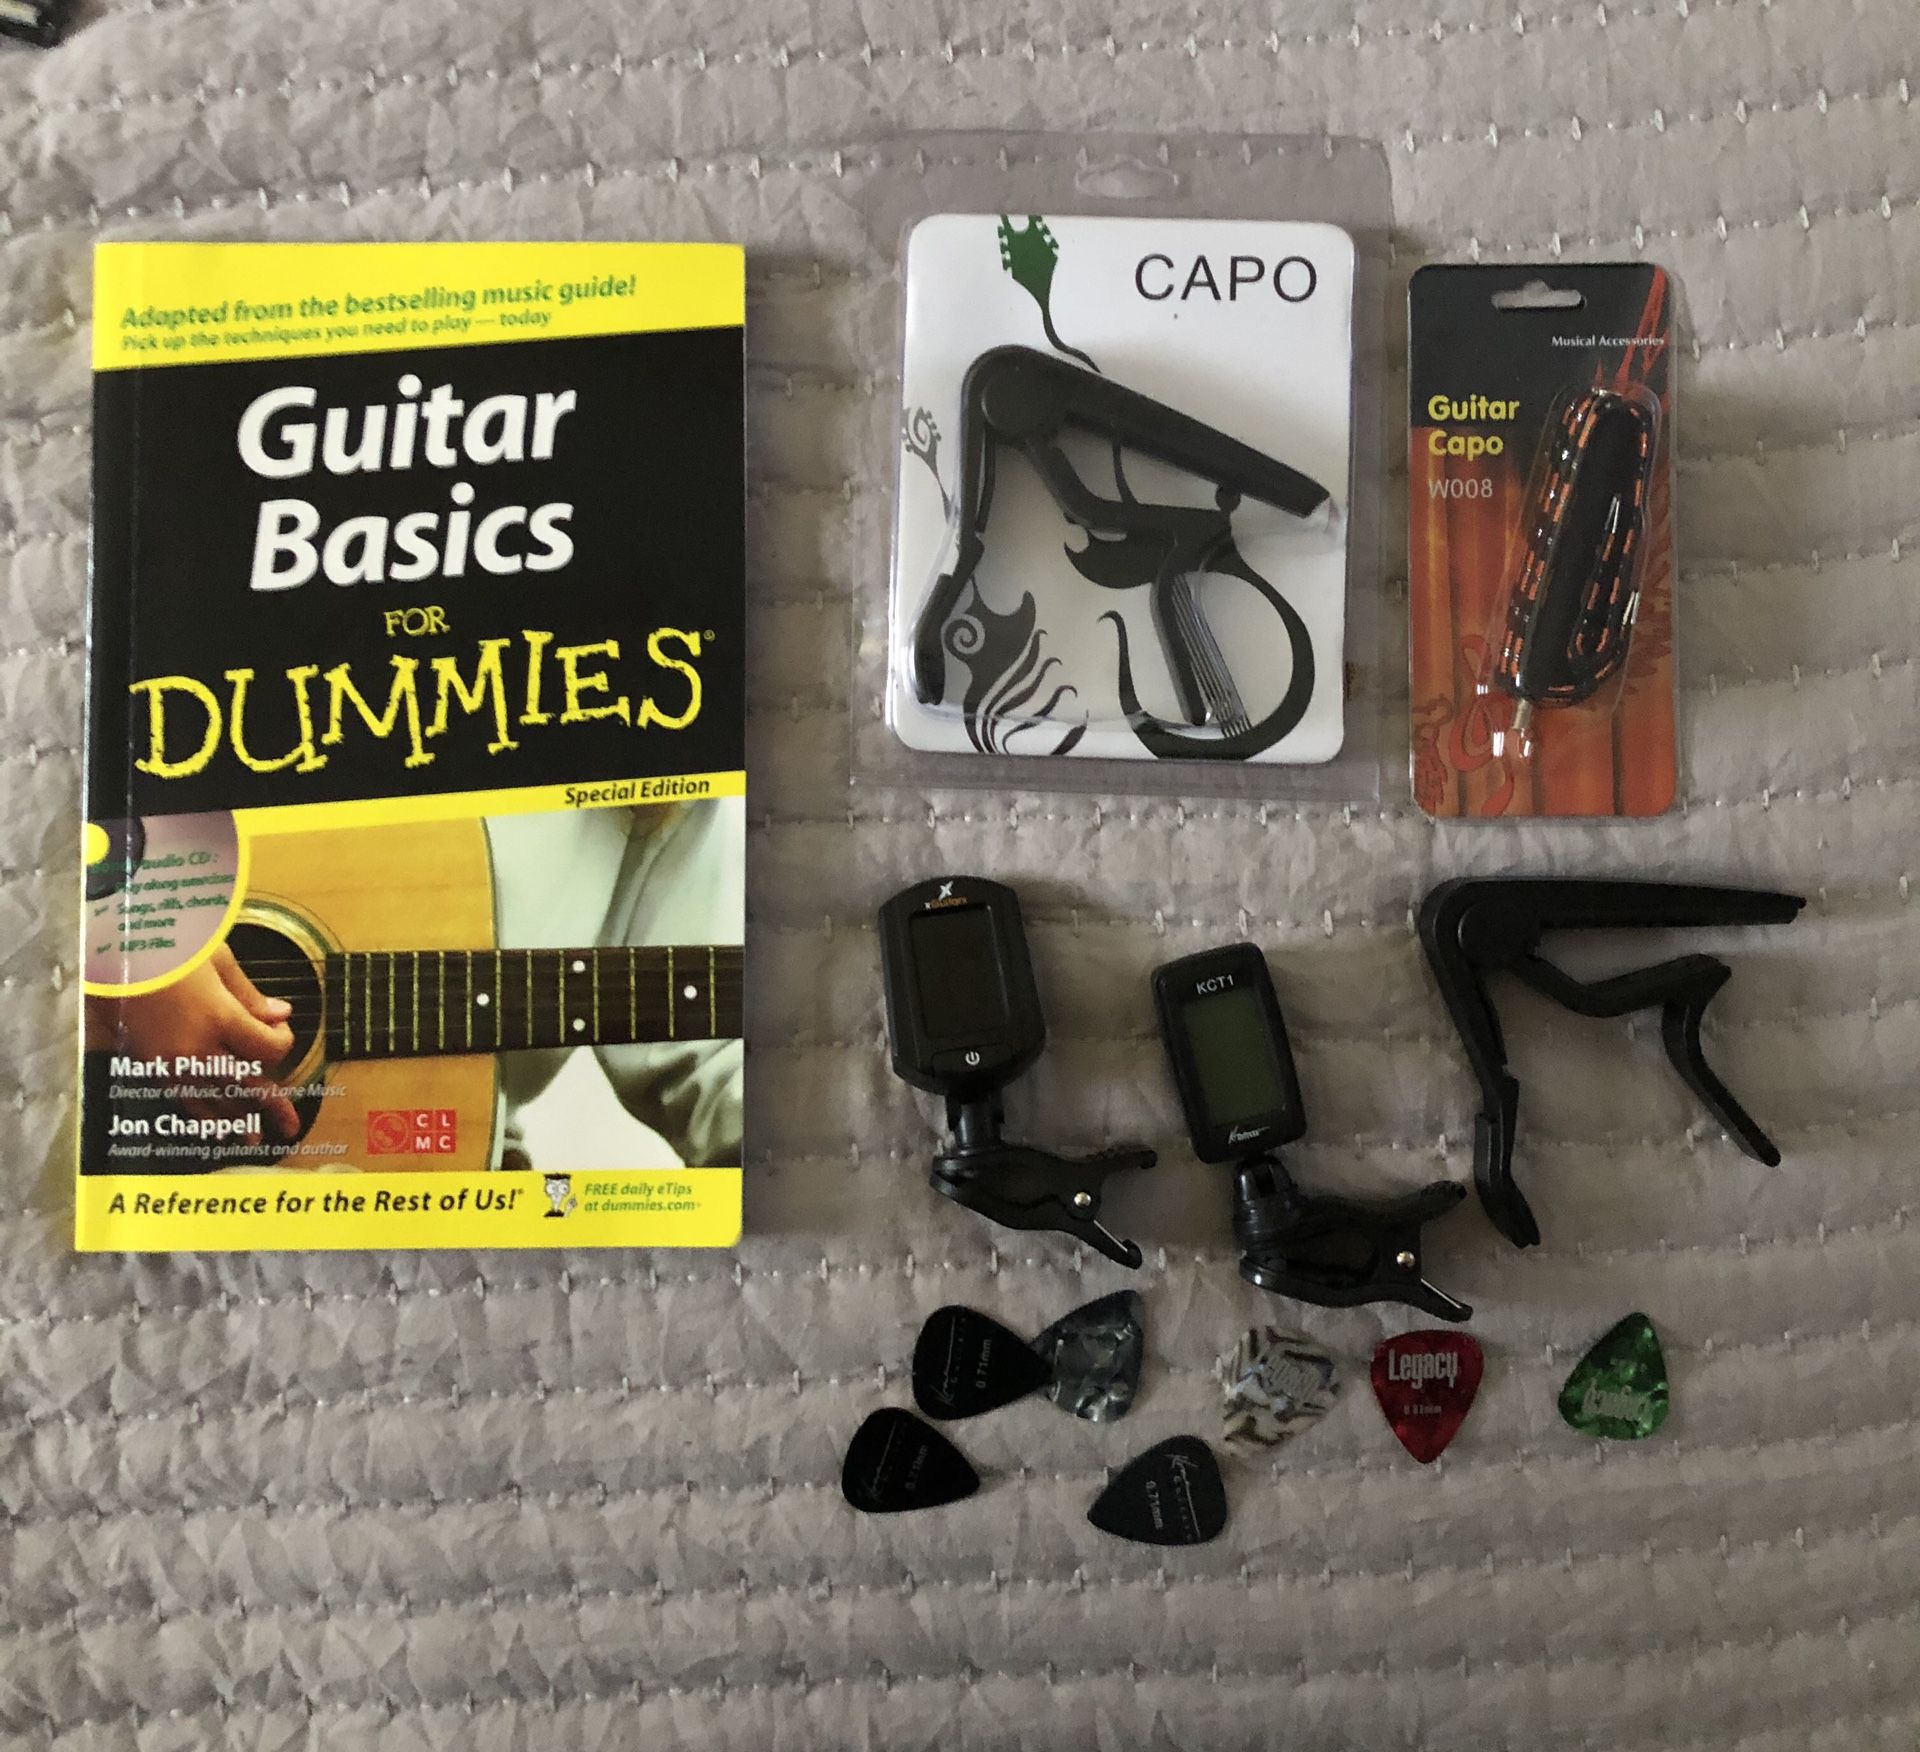 Guitar Copas & Tuners